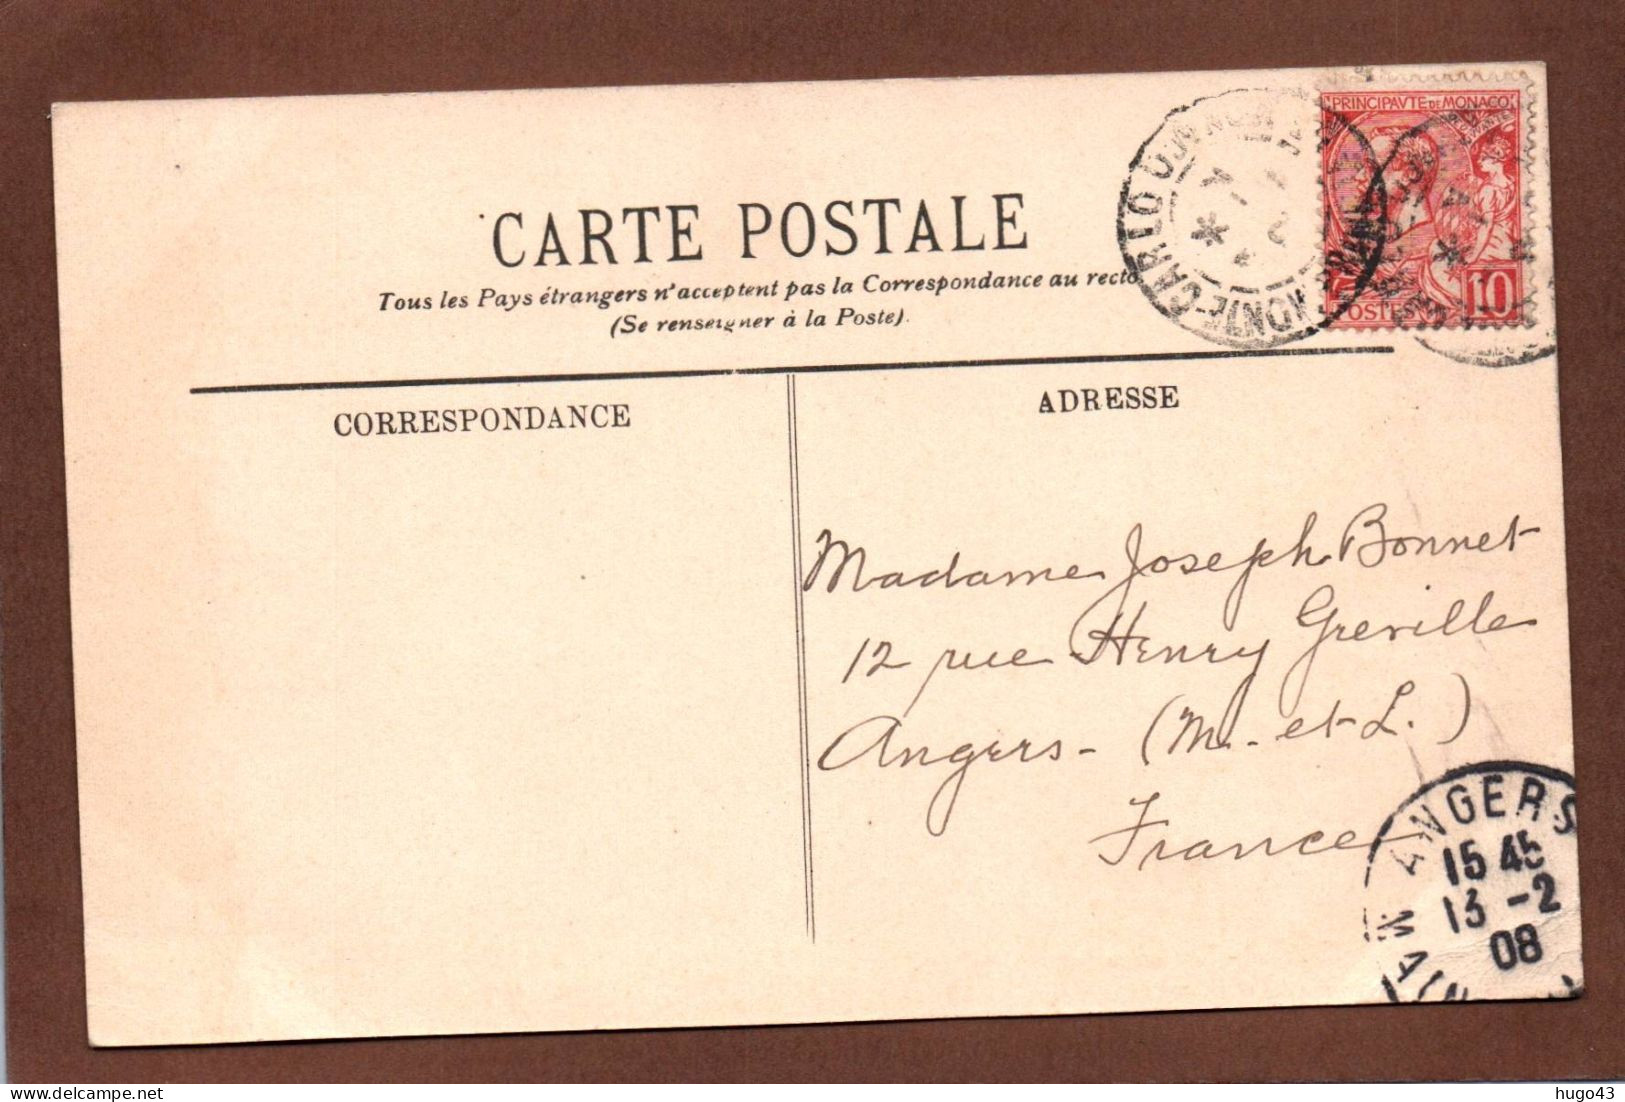 (RECTO / VERSO) MONTE CARLO EN 1908 - N° 962 - LE CASINO ET HOTEL DE PARIS - BEAU CACHET ET TIMBRE DE MONACO - CPA - Alberghi